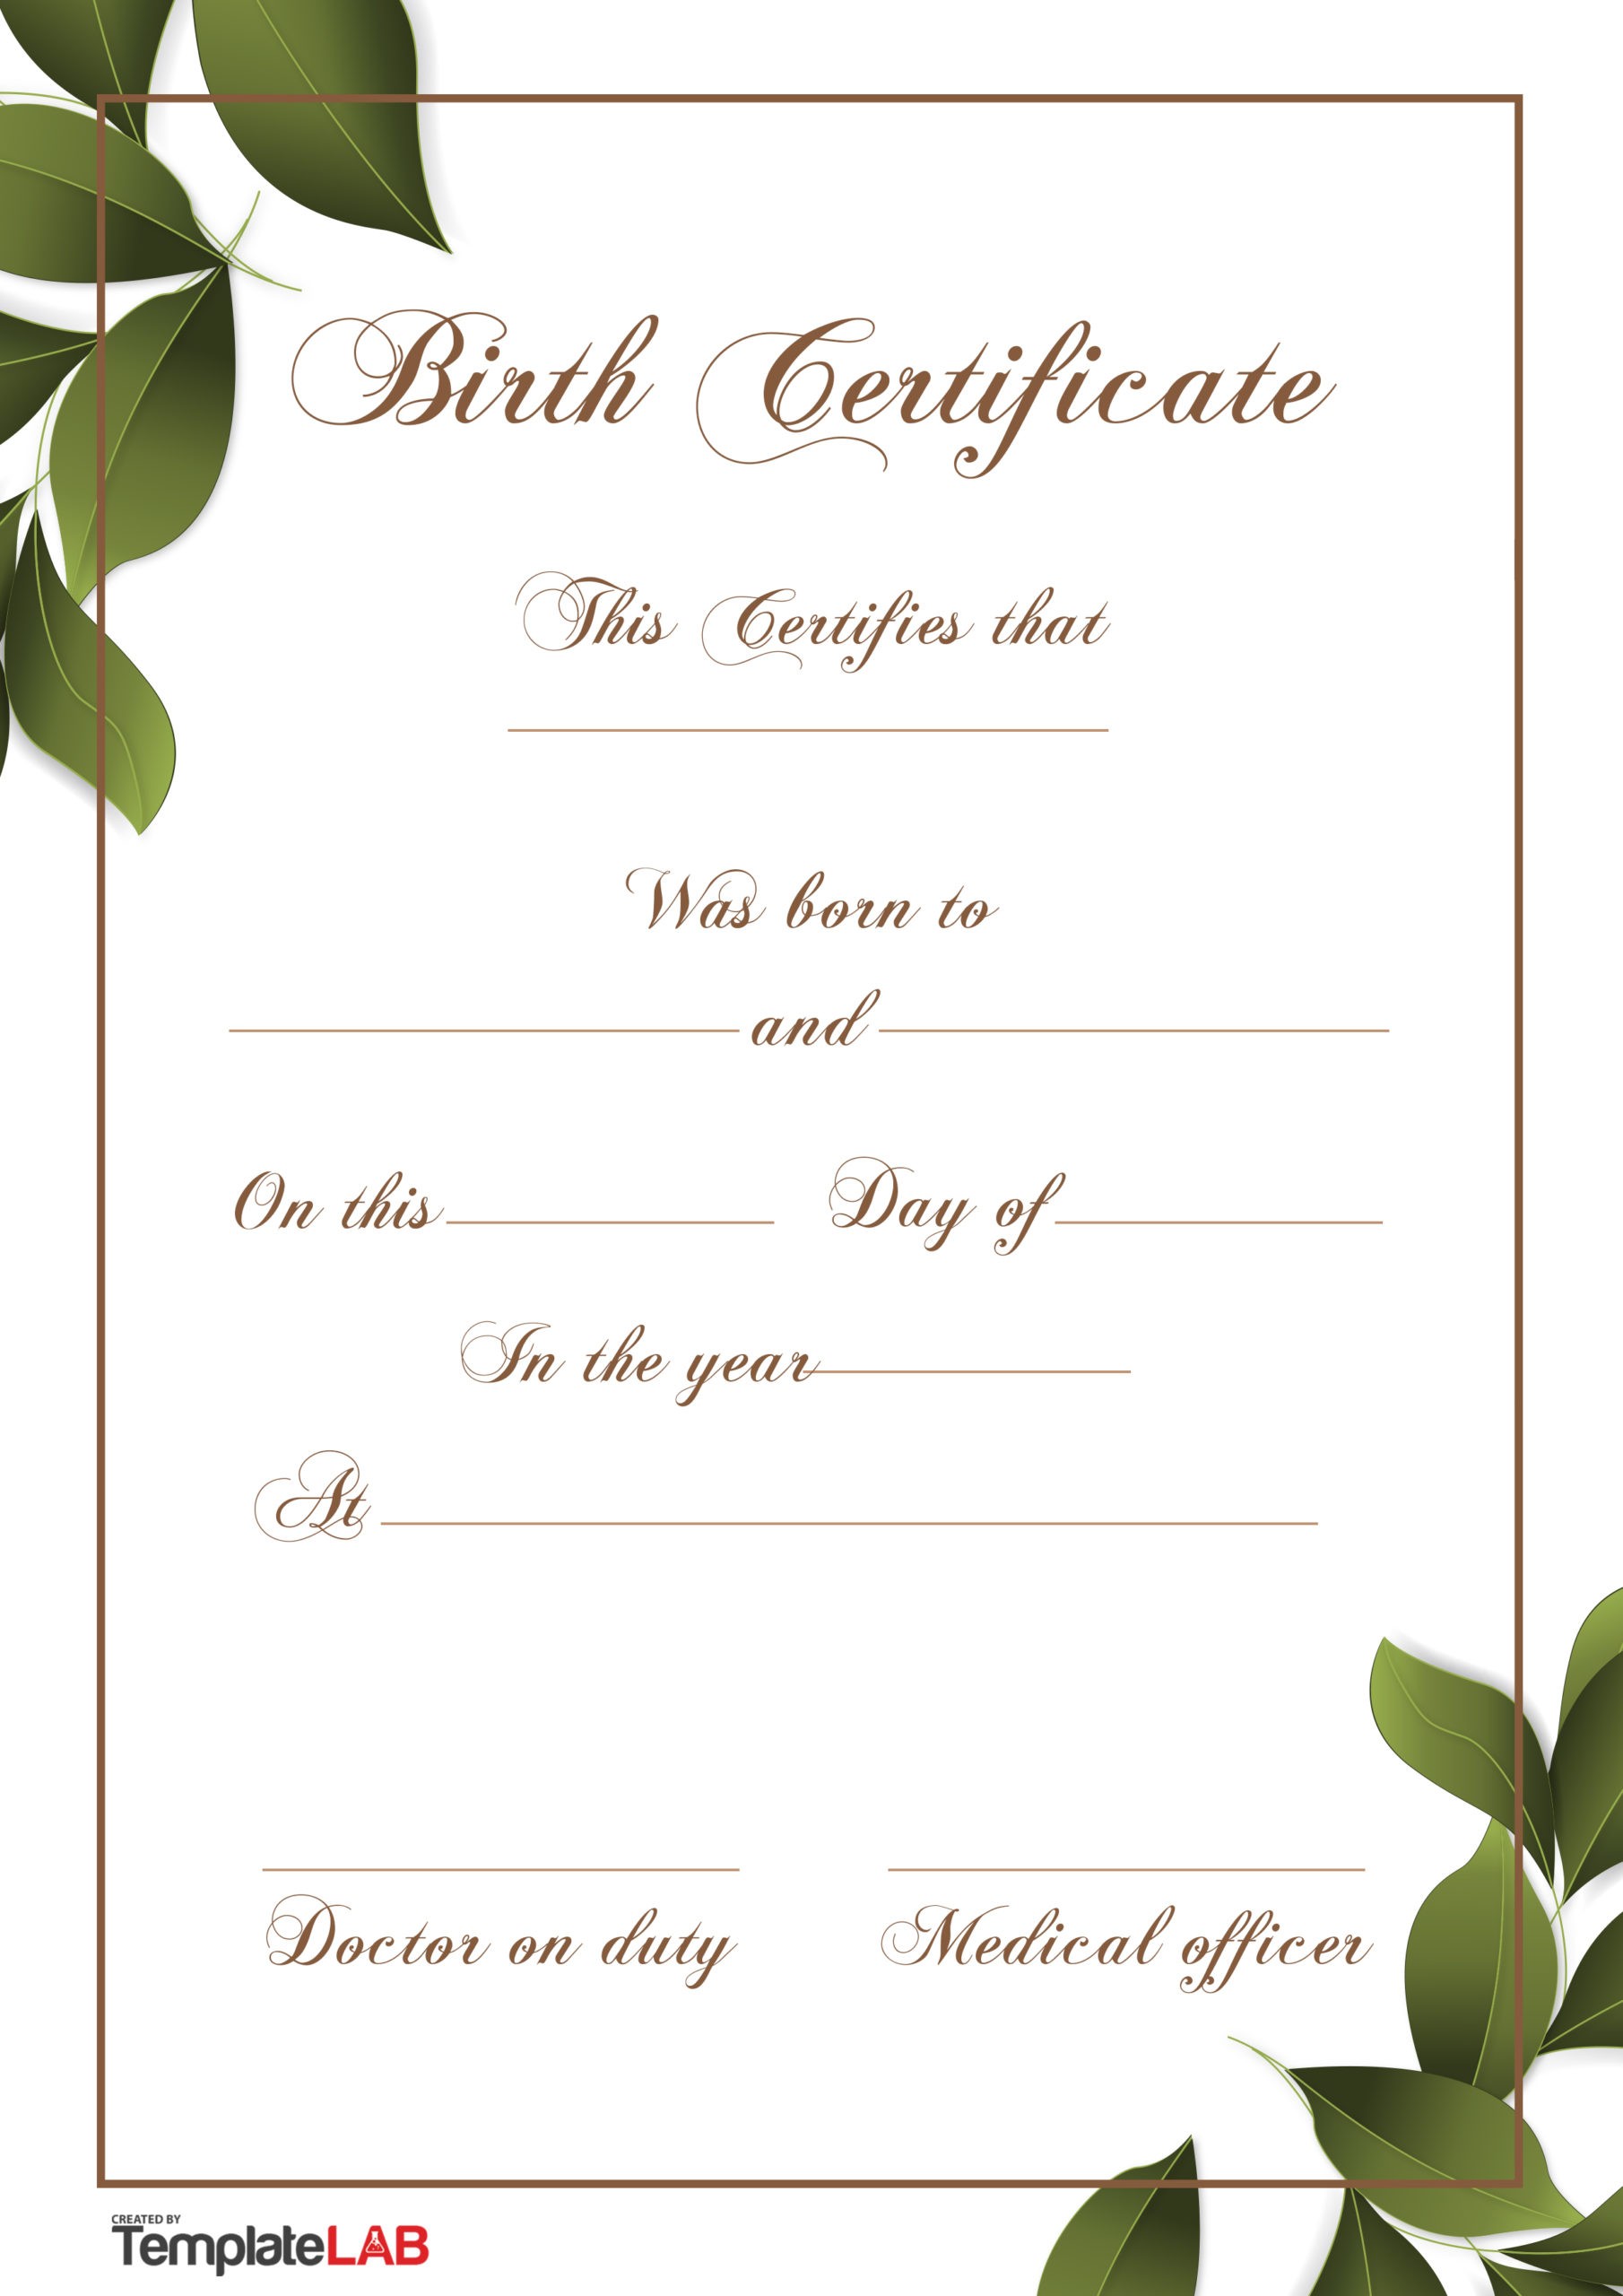 27 Birth Certificate Templates (Word, PPT & PDF) ᐅ TemplateLab